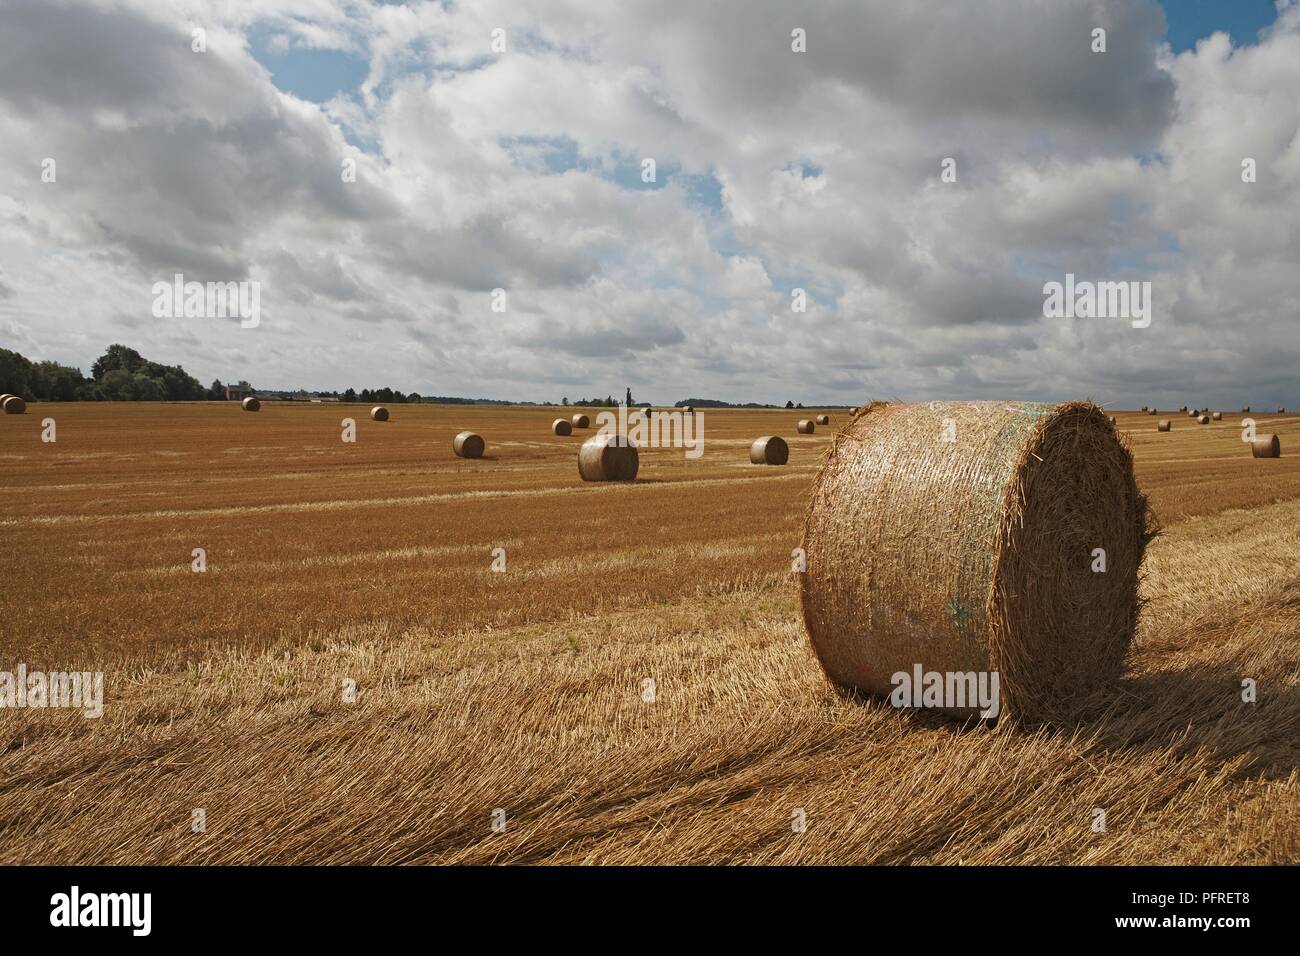 Belgium, circular bales in field Stock Photo